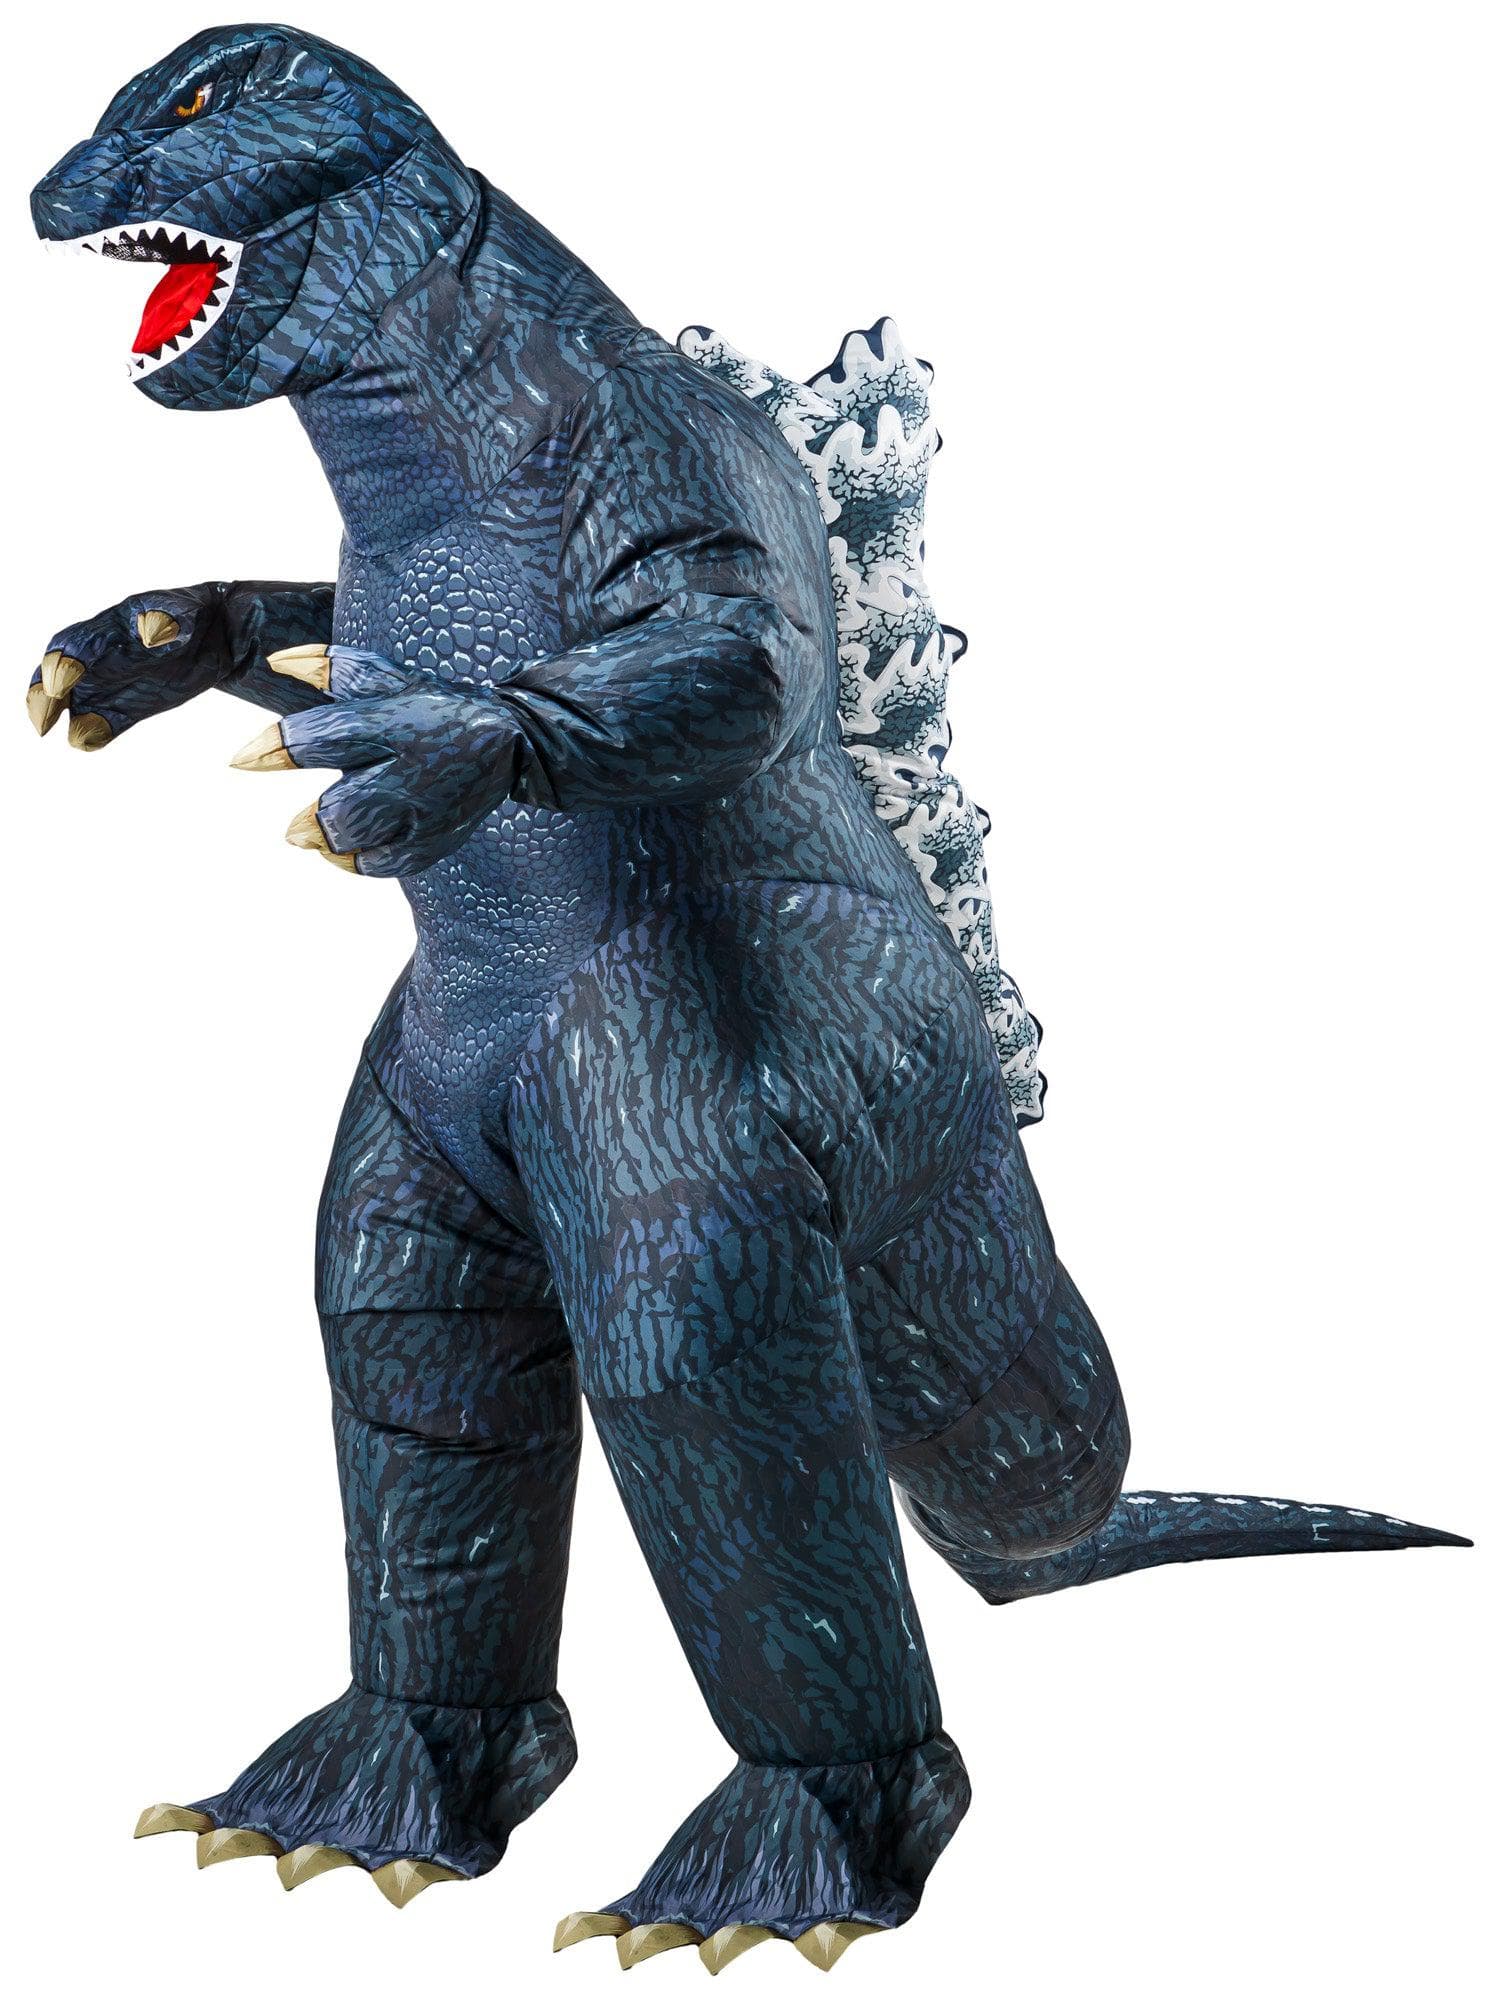 Kids' Godzilla Inflatable Costume - costumes.com